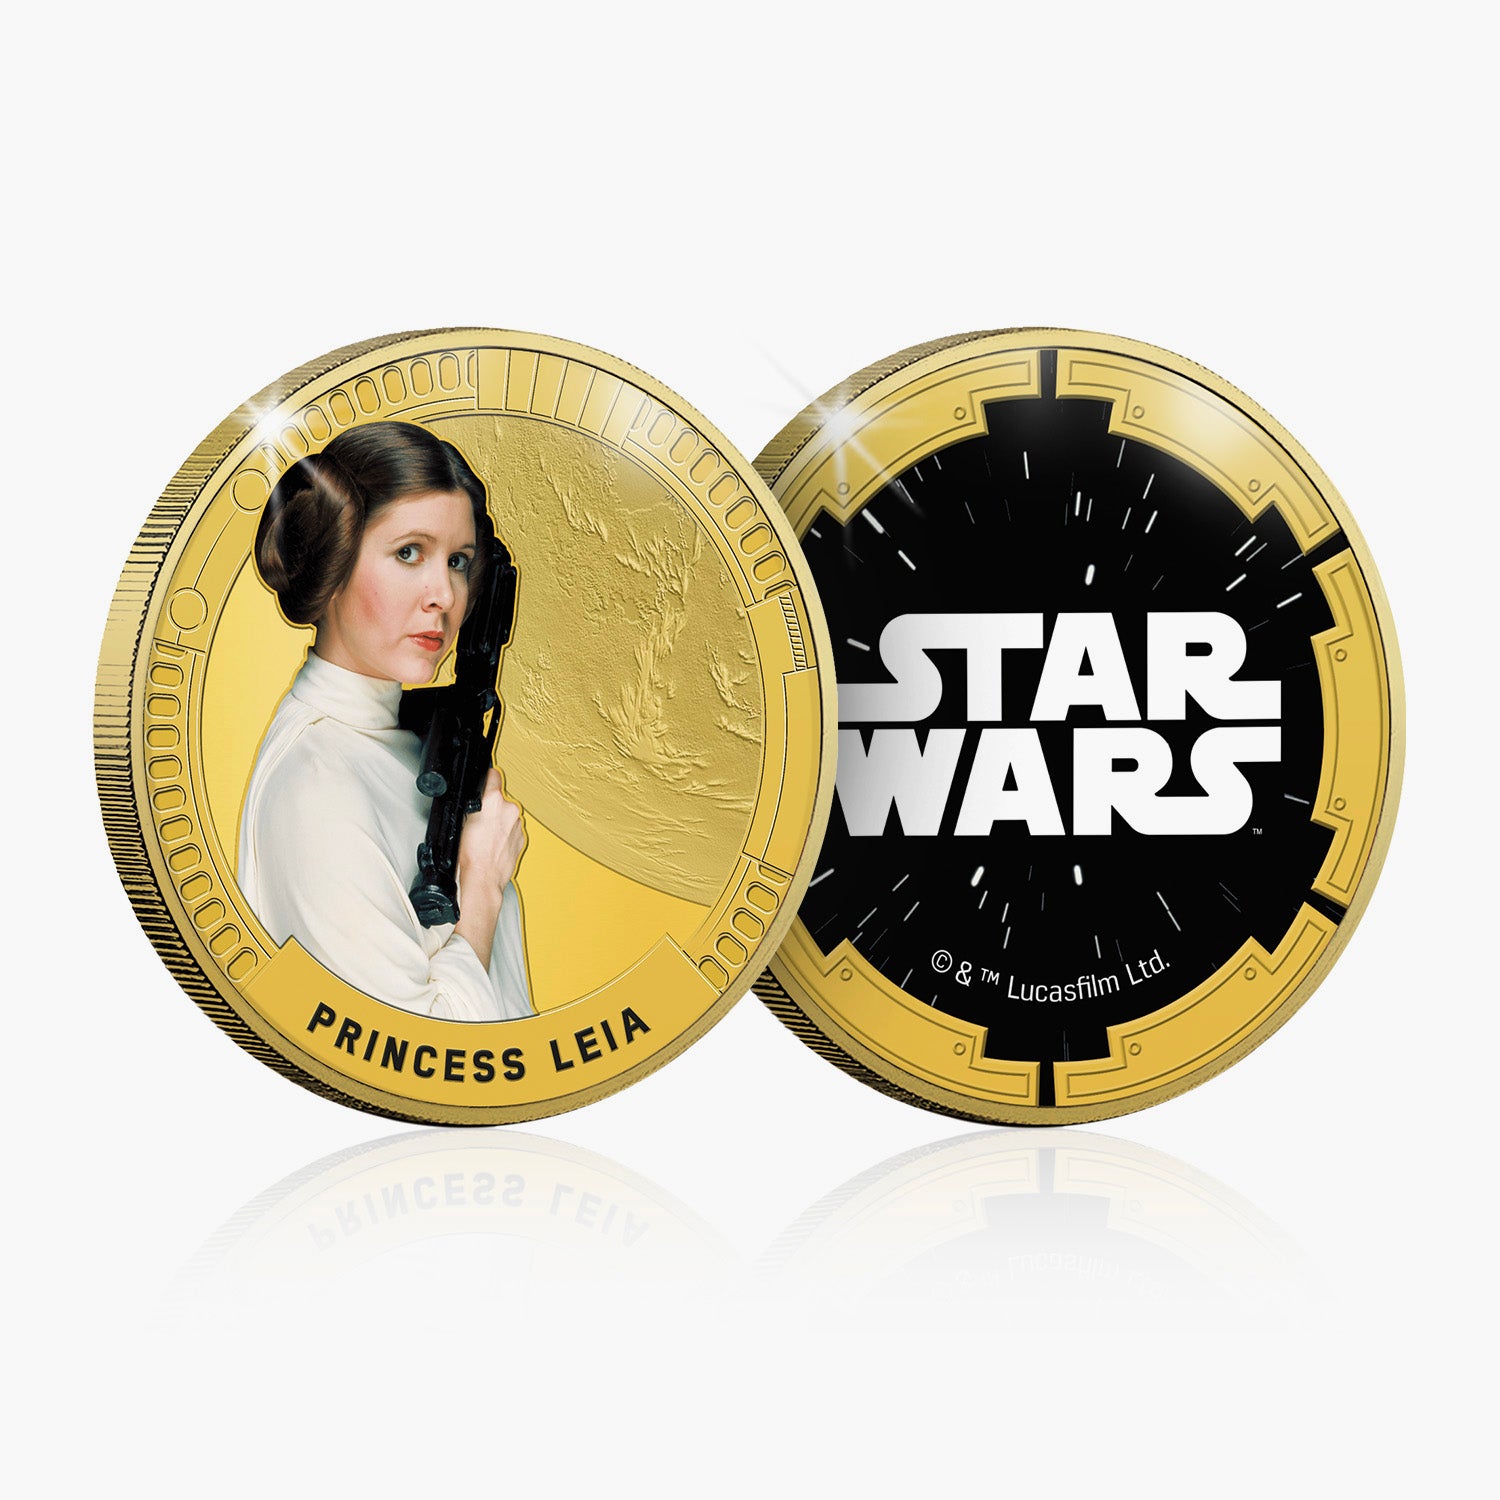 Princess Leia Gold - Plated Commemorative